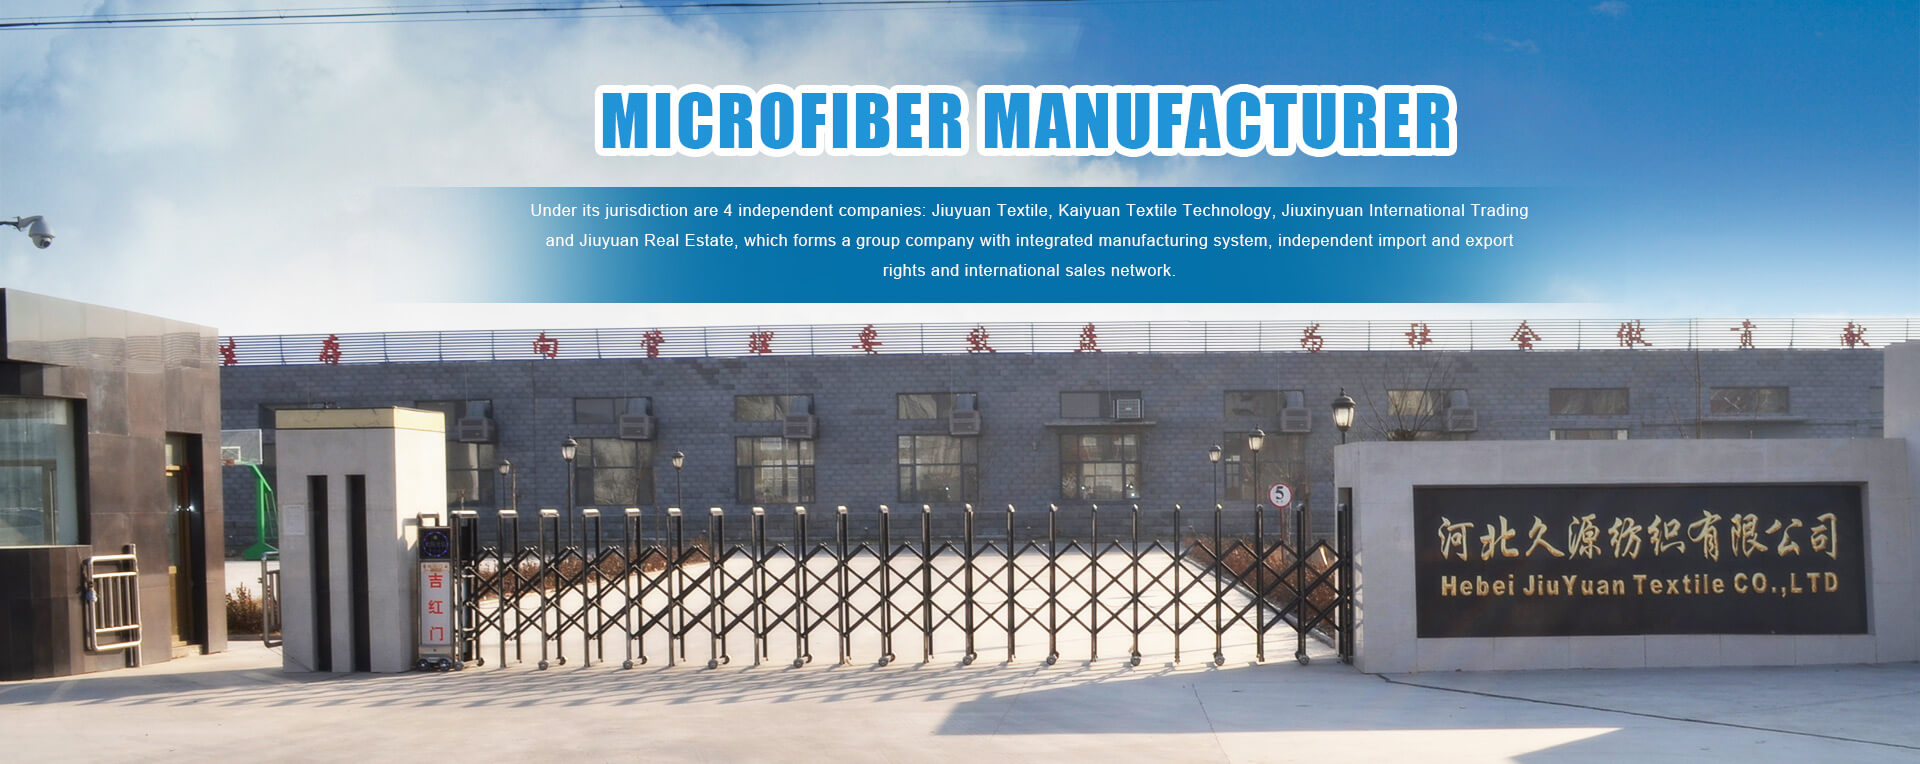 Microfiber manufacturers